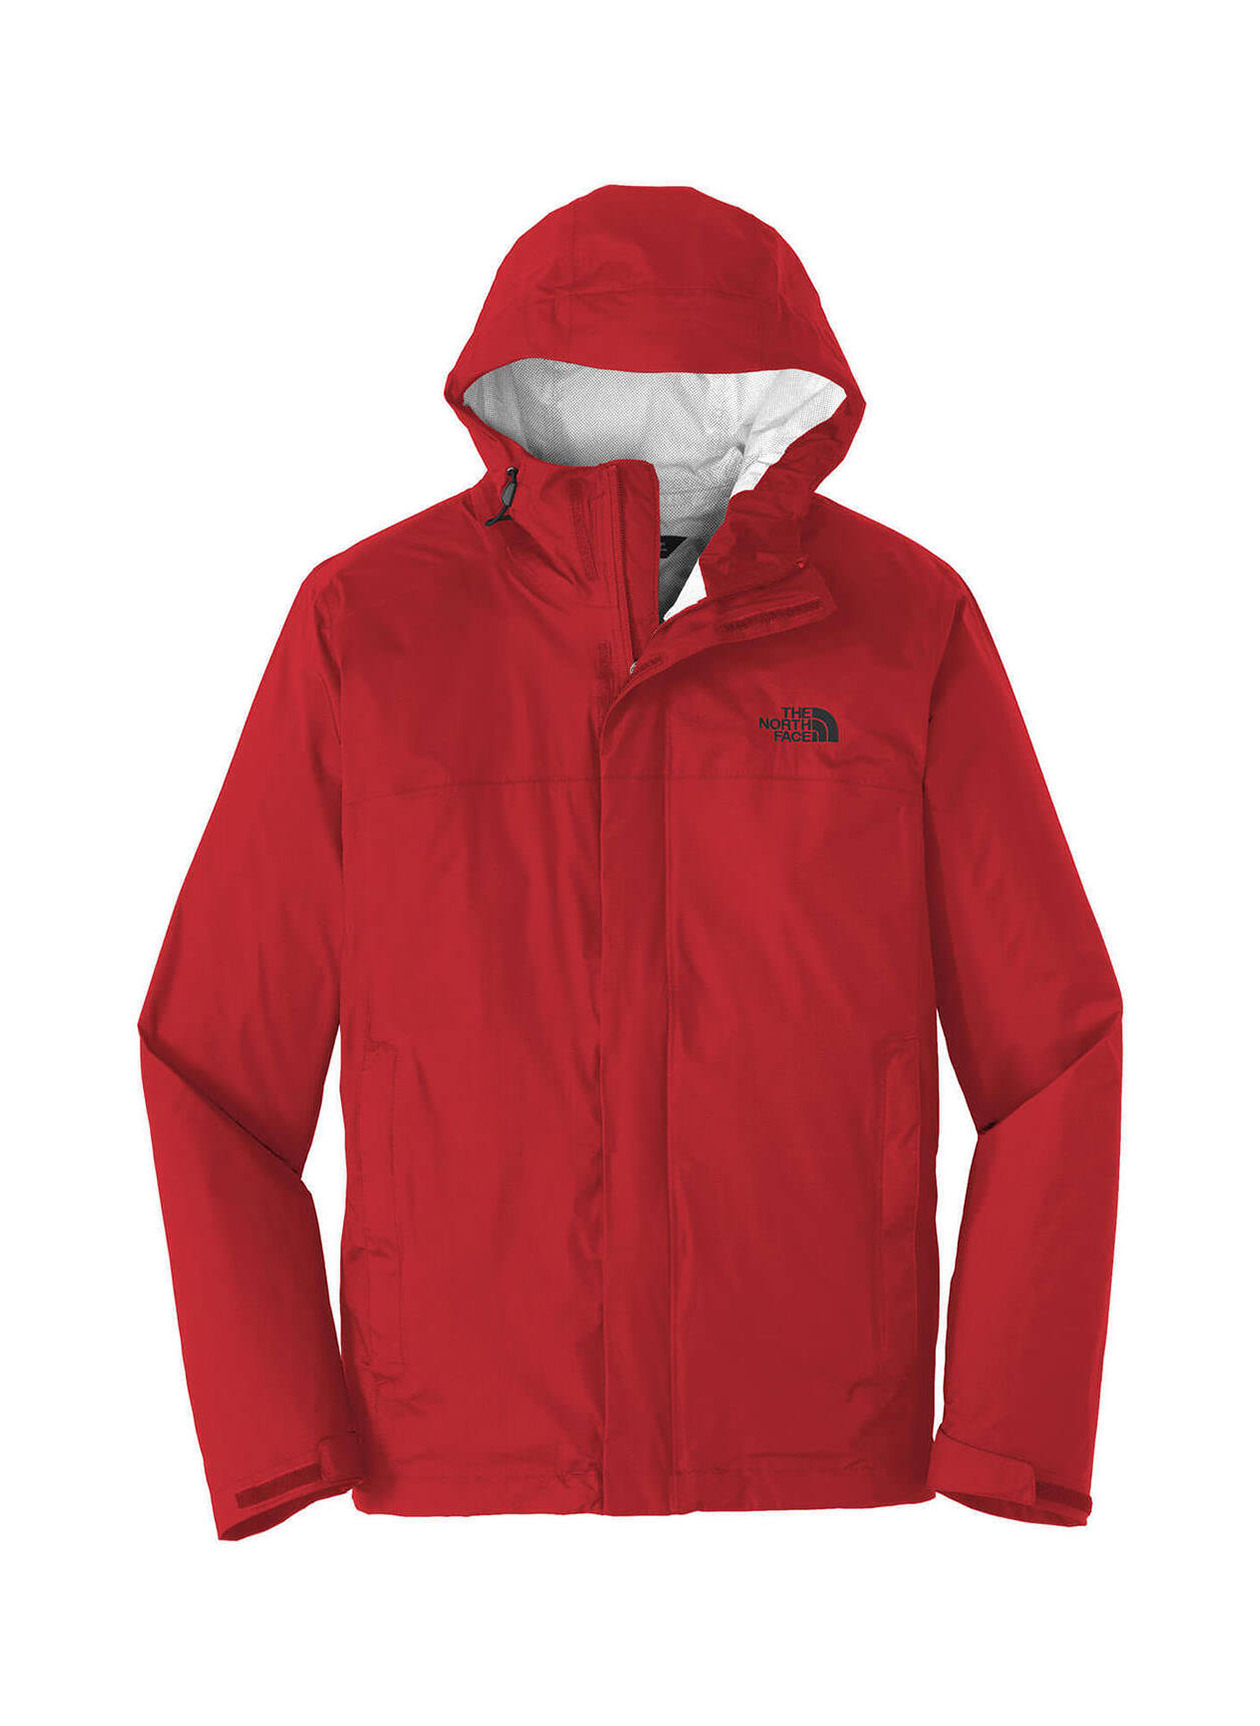 The North Face Men's Rage Red DryVent Rain Jacket | Custom